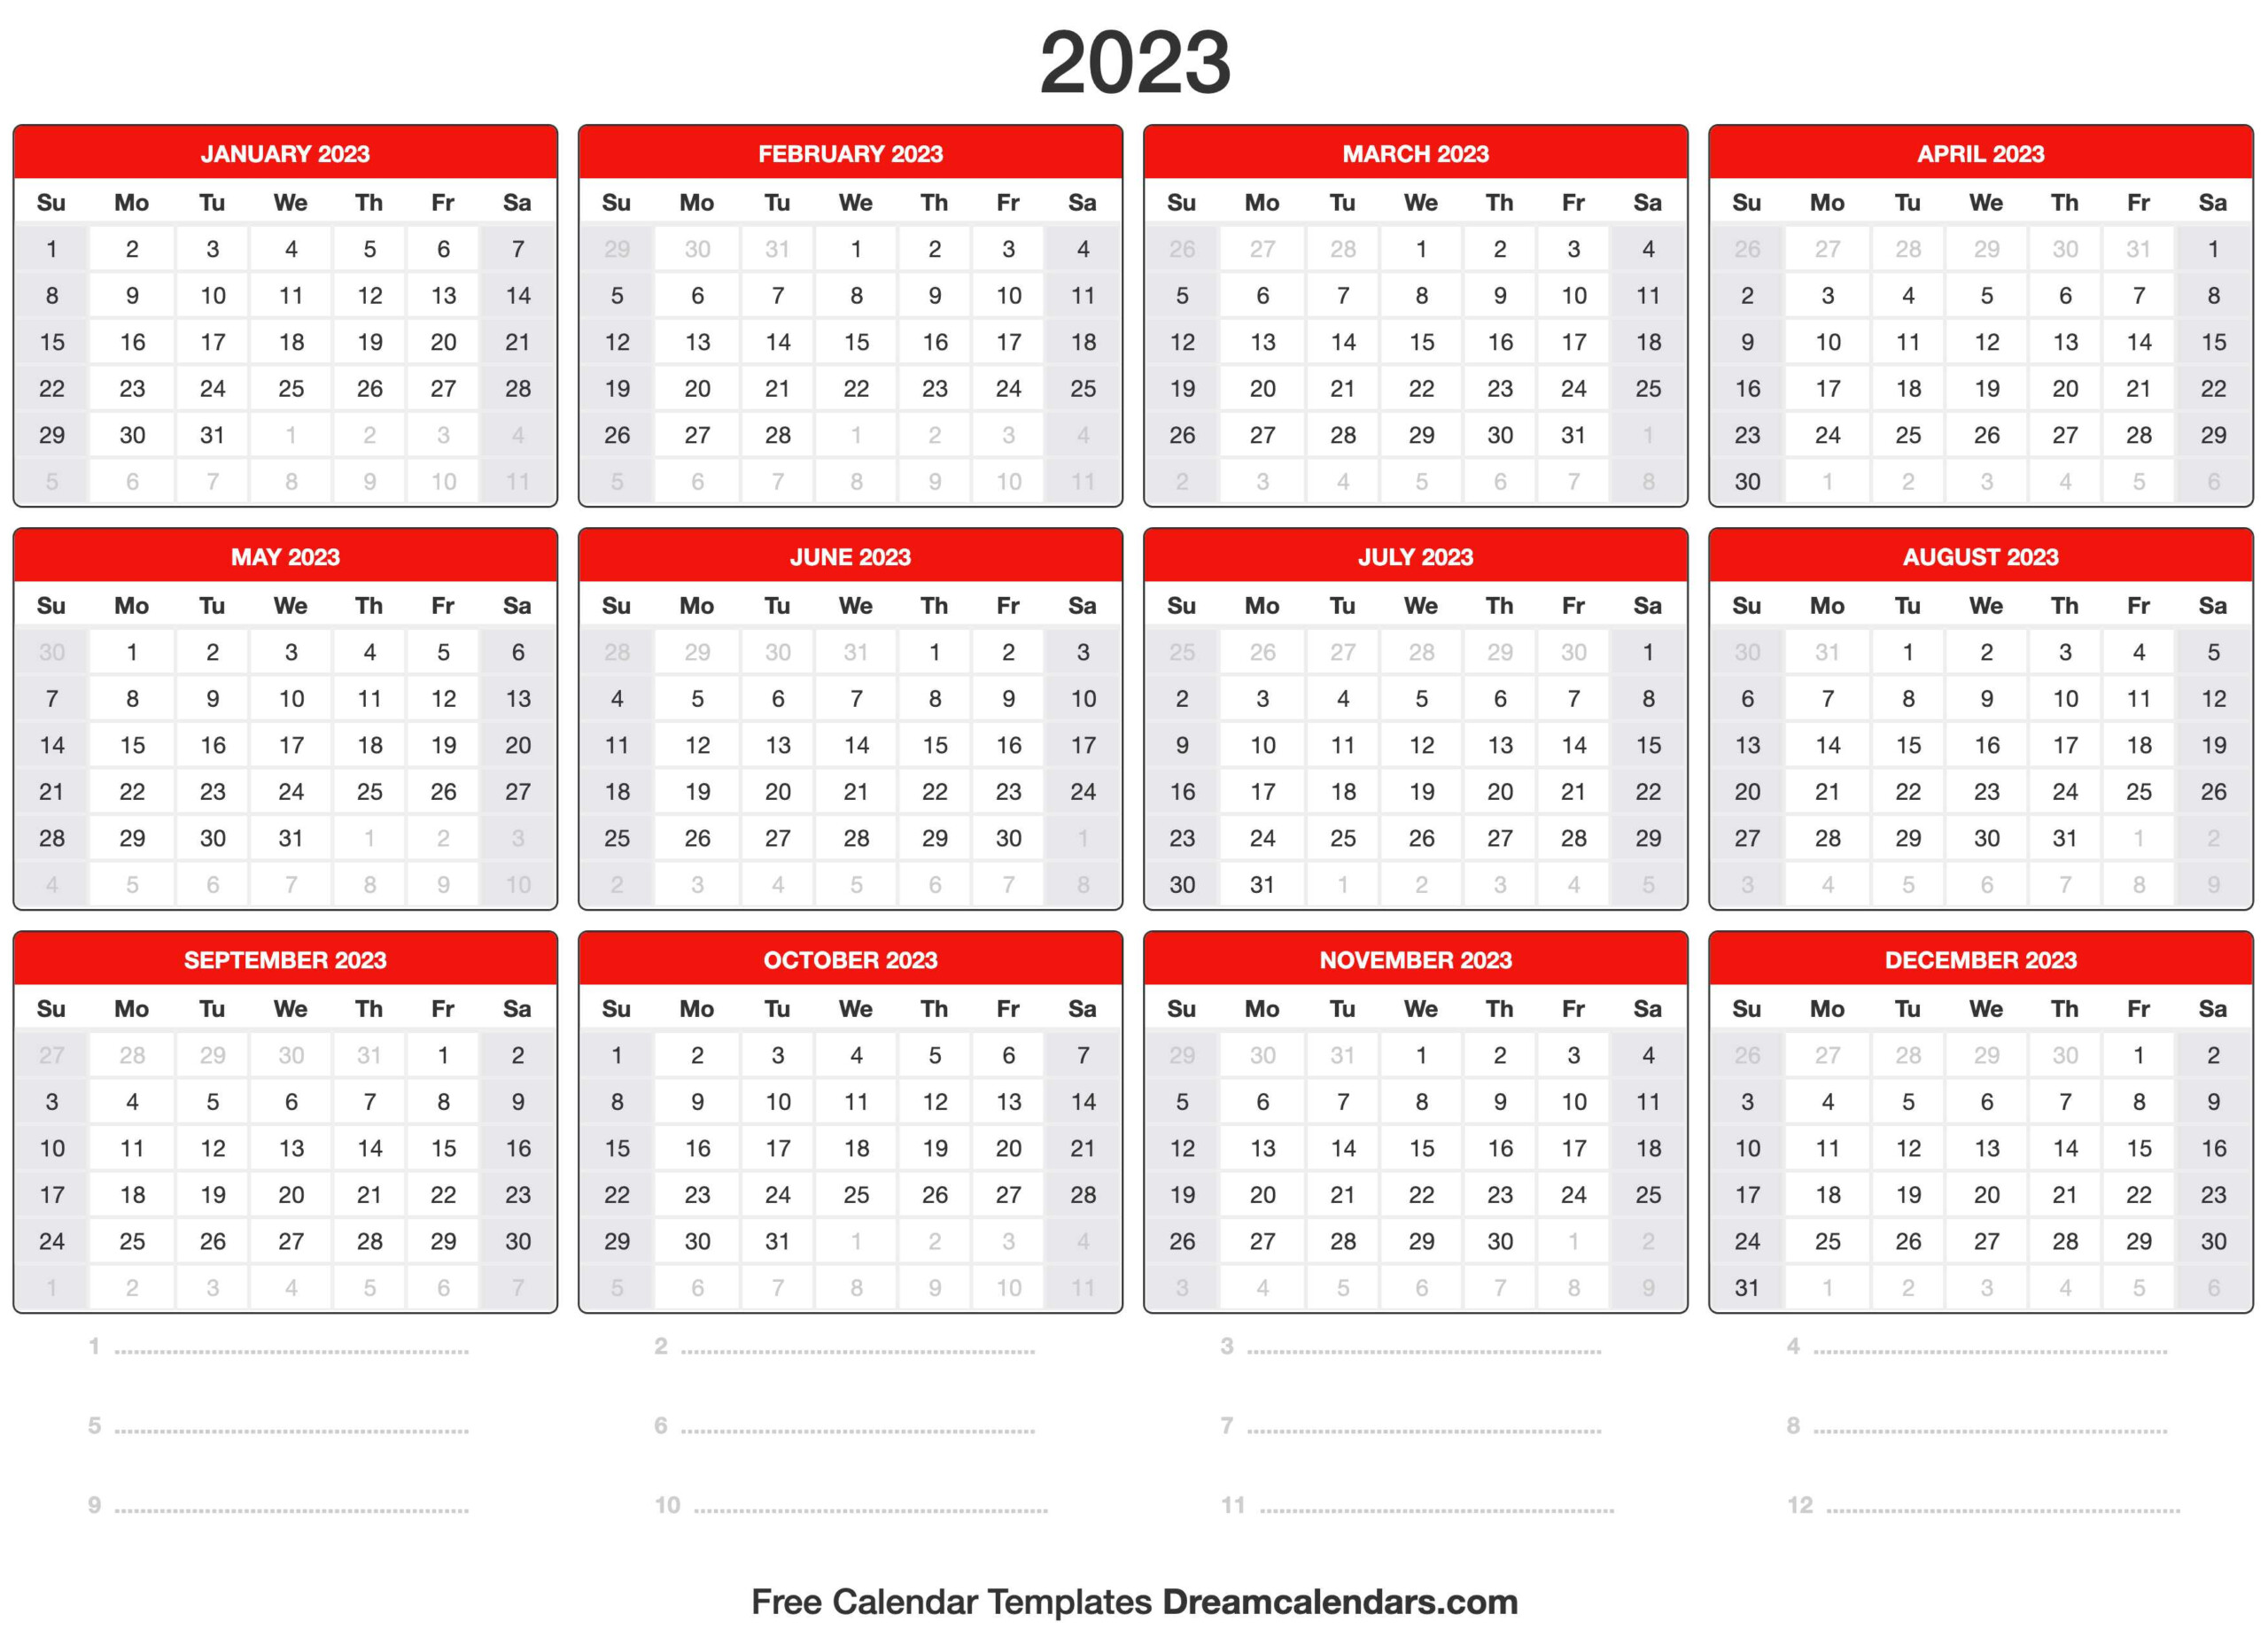 uncc-calendar-2023